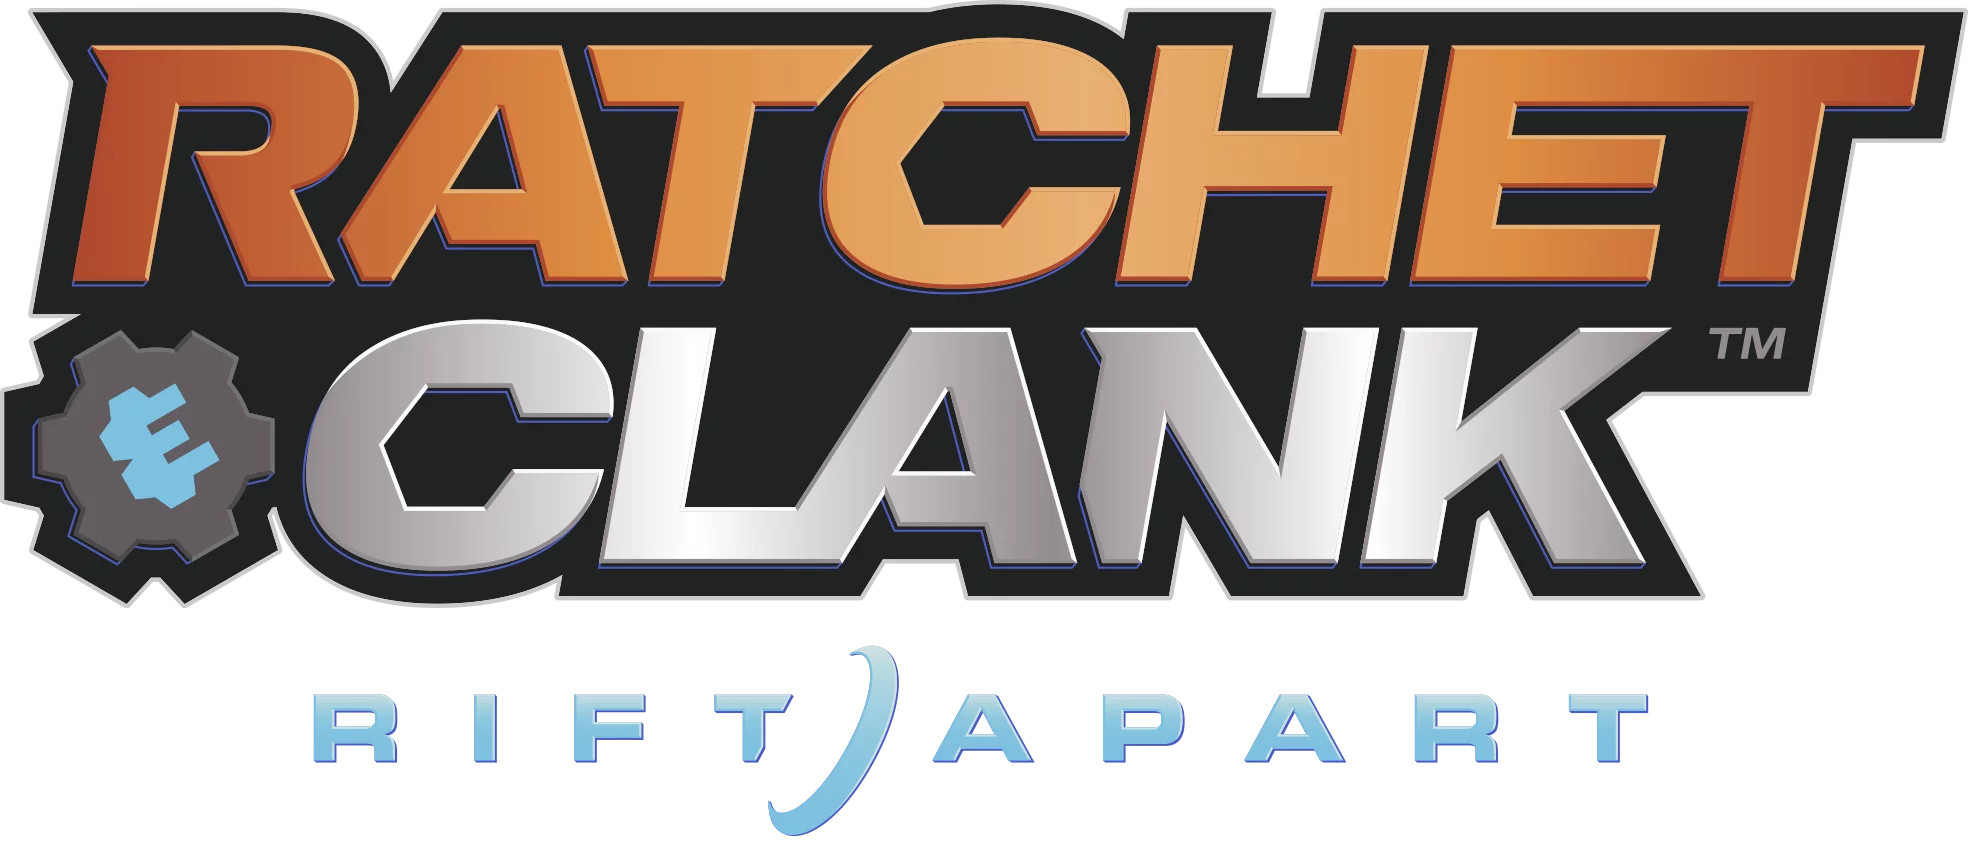 Ratchet & Clank: Rift Apart Images - LaunchBox Games Database